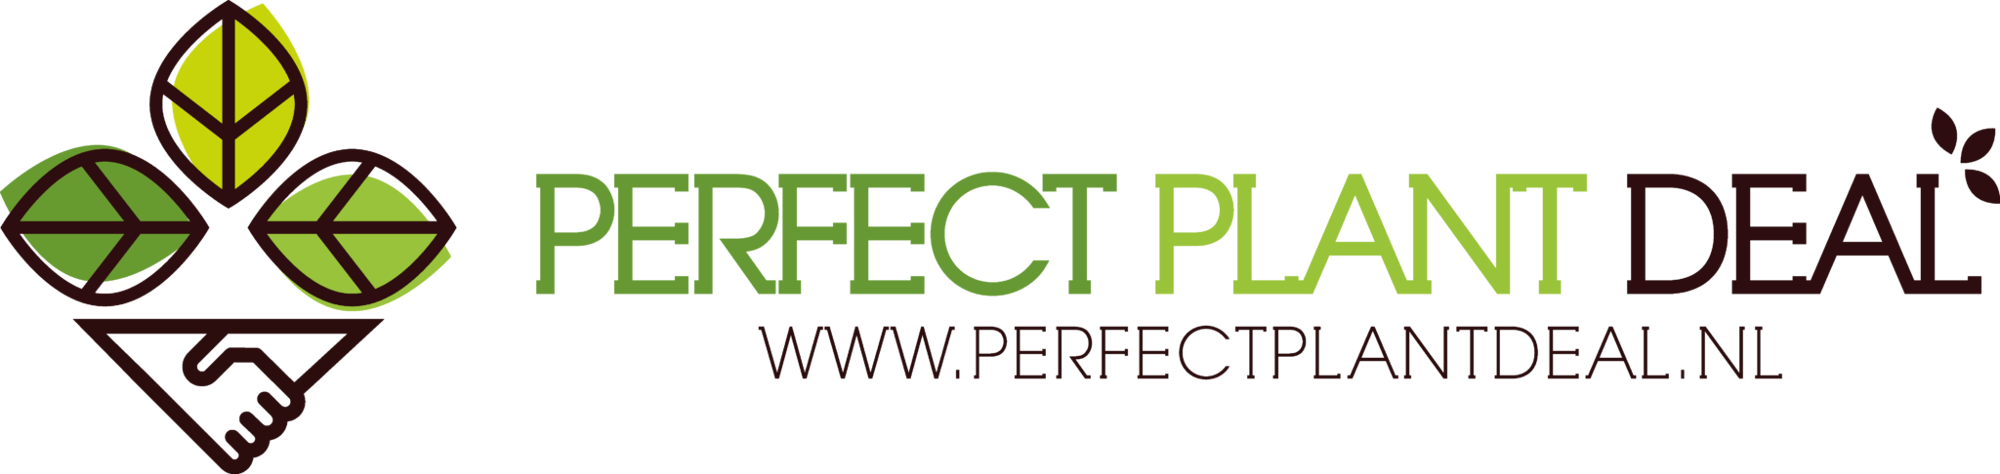 perfectplantdeal-logo